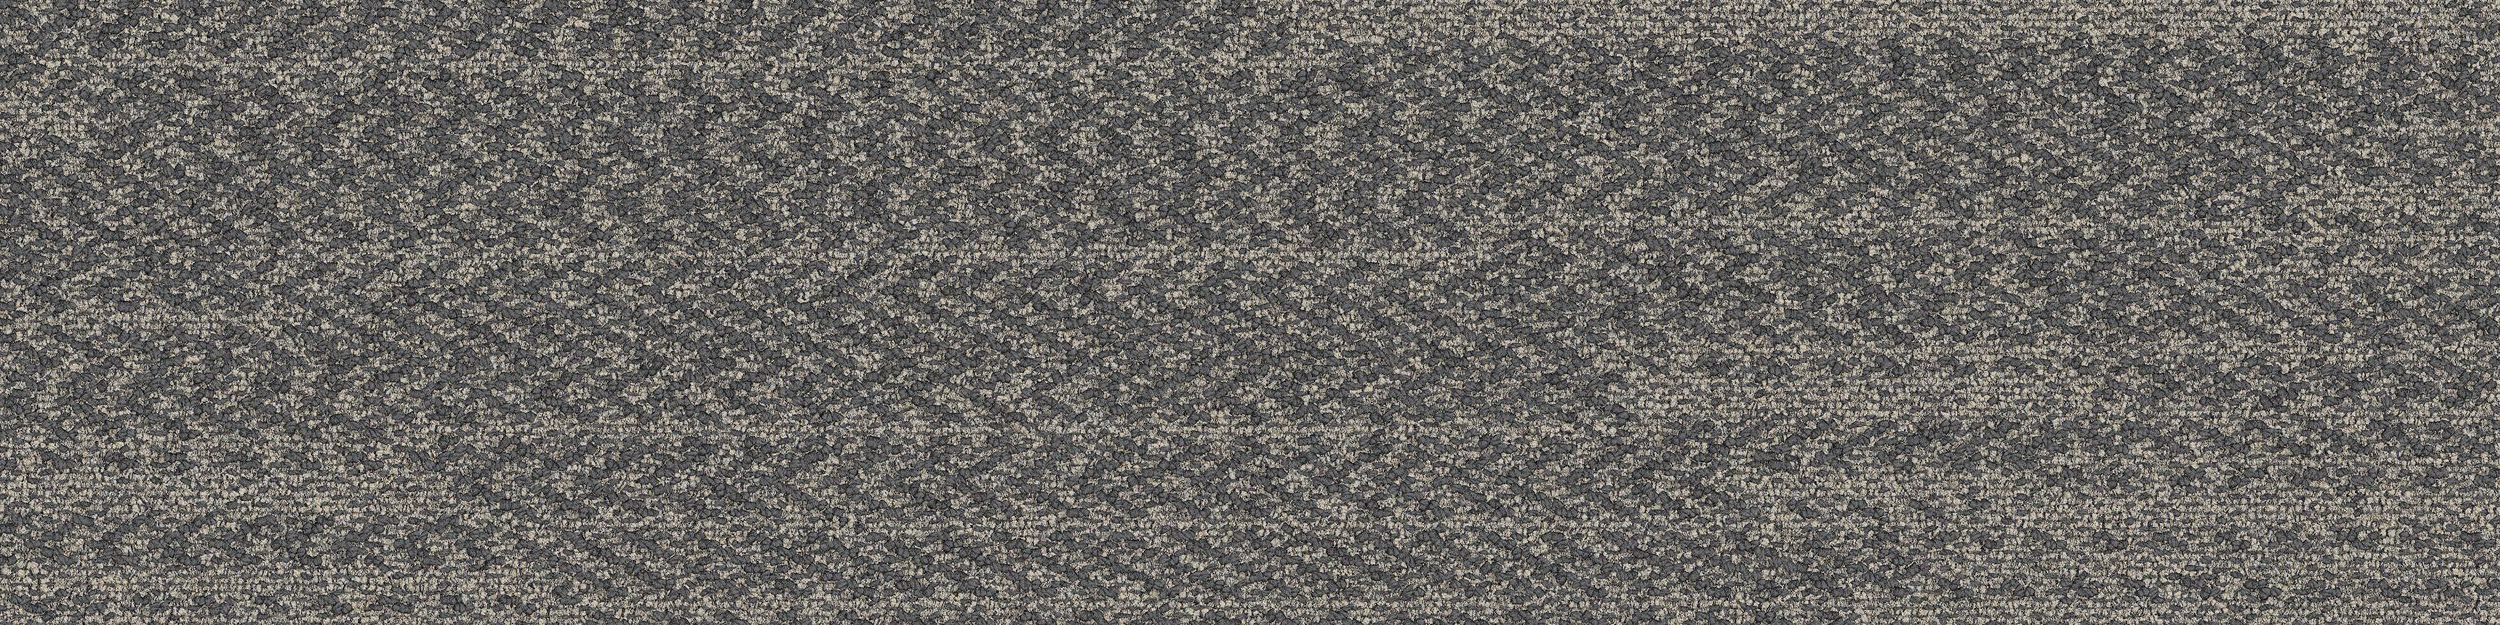 Open Air 408 Carpet Tile In Nickel numéro d’image 2